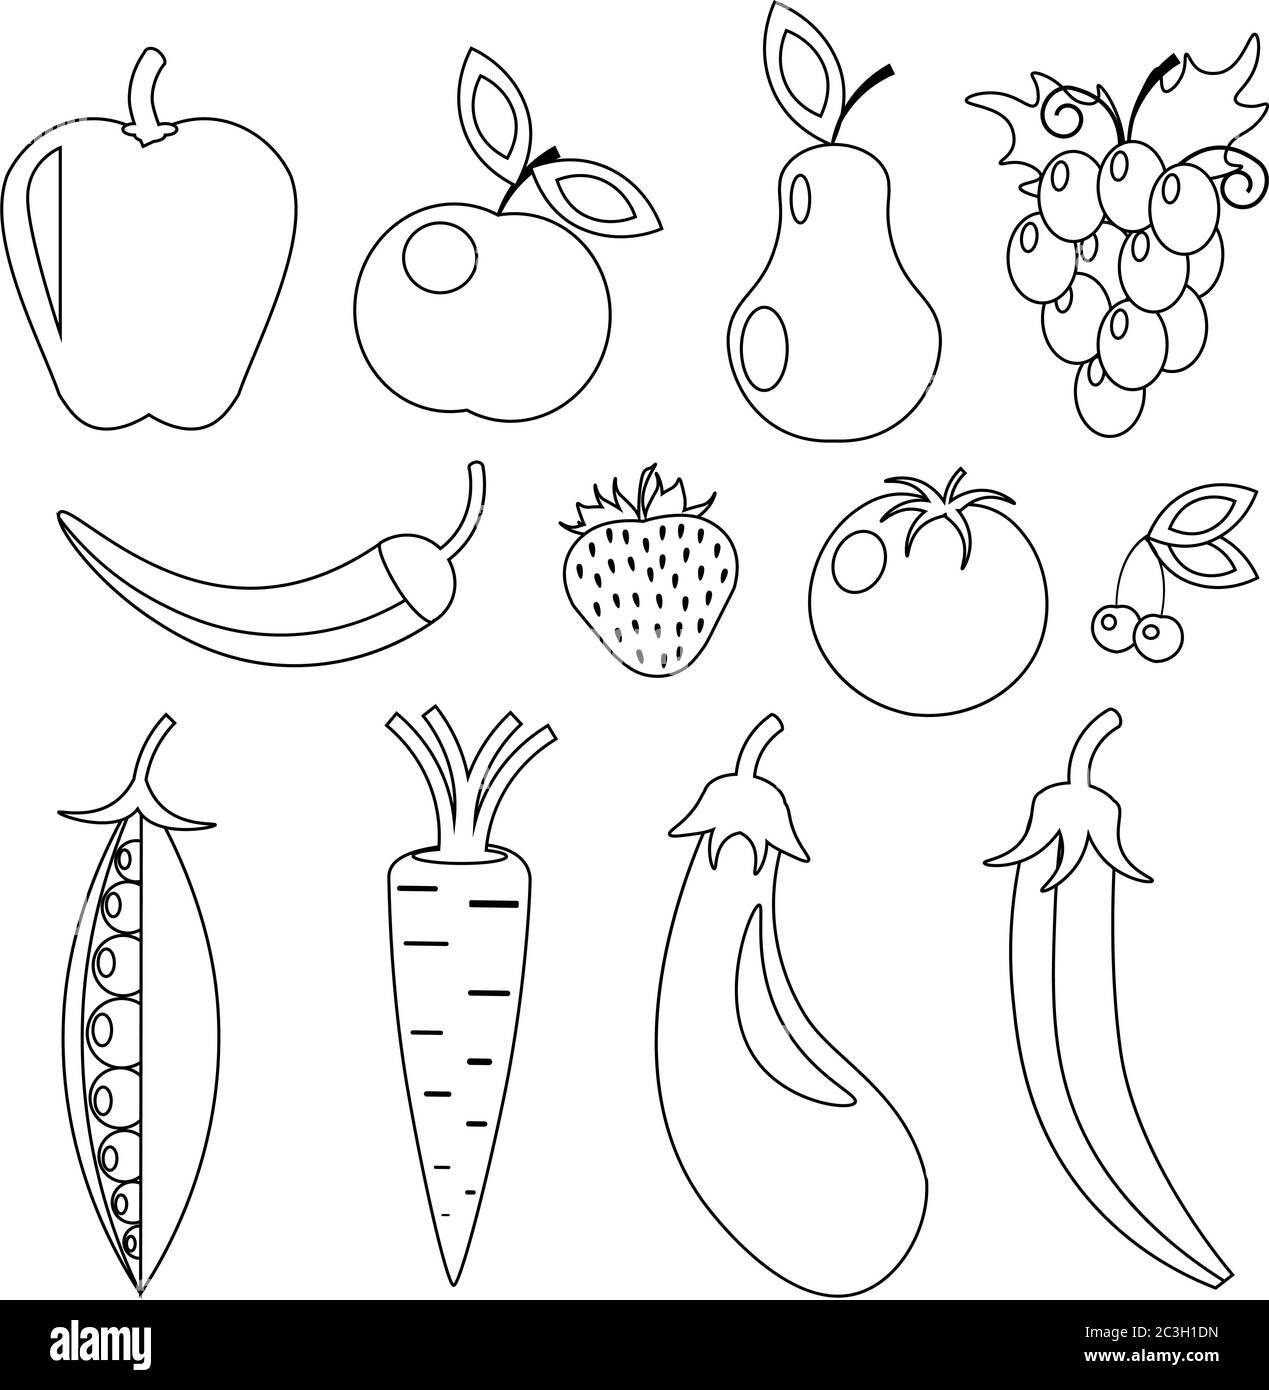 Vegetables (set) - black and white illustration/ drawing Stock Vector Image  & Art - Alamy